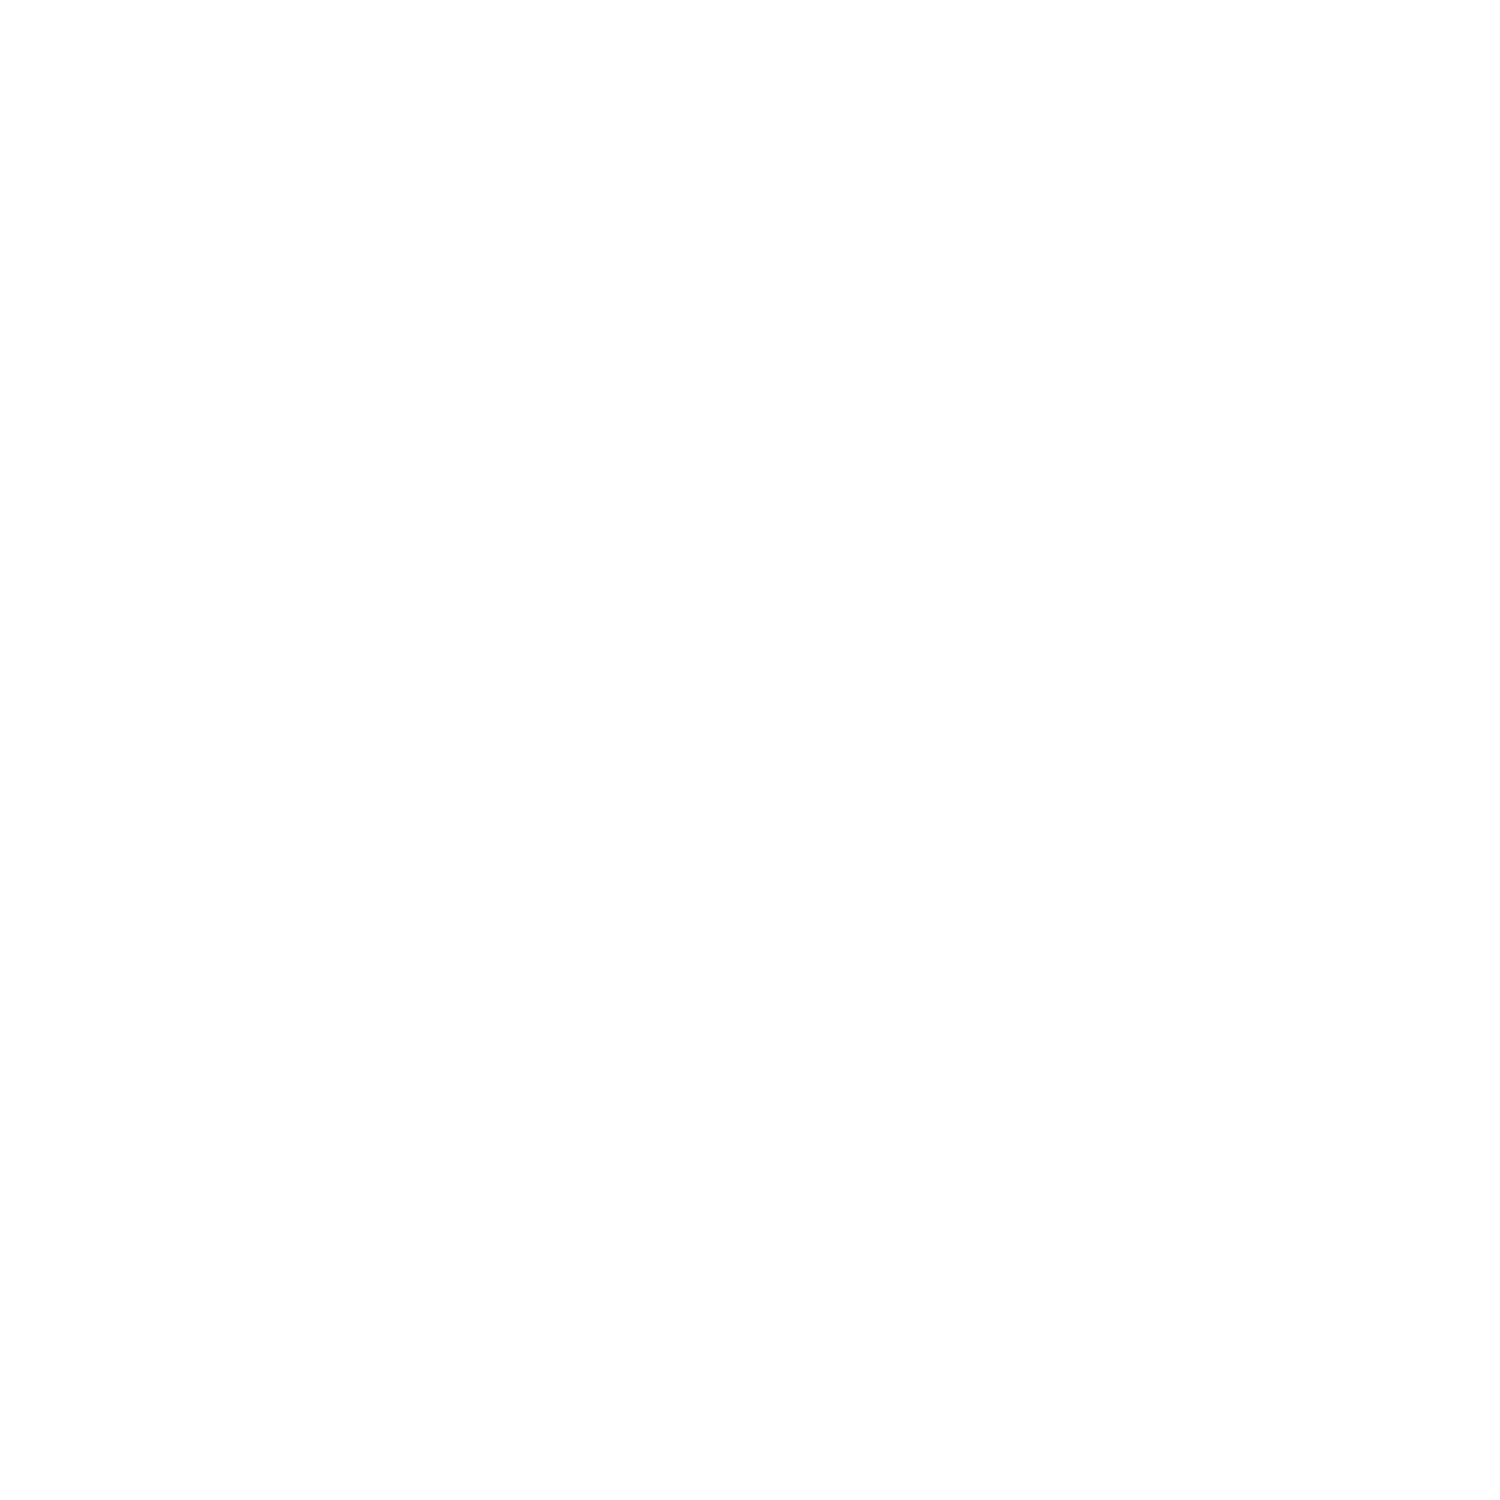 Heizr Club